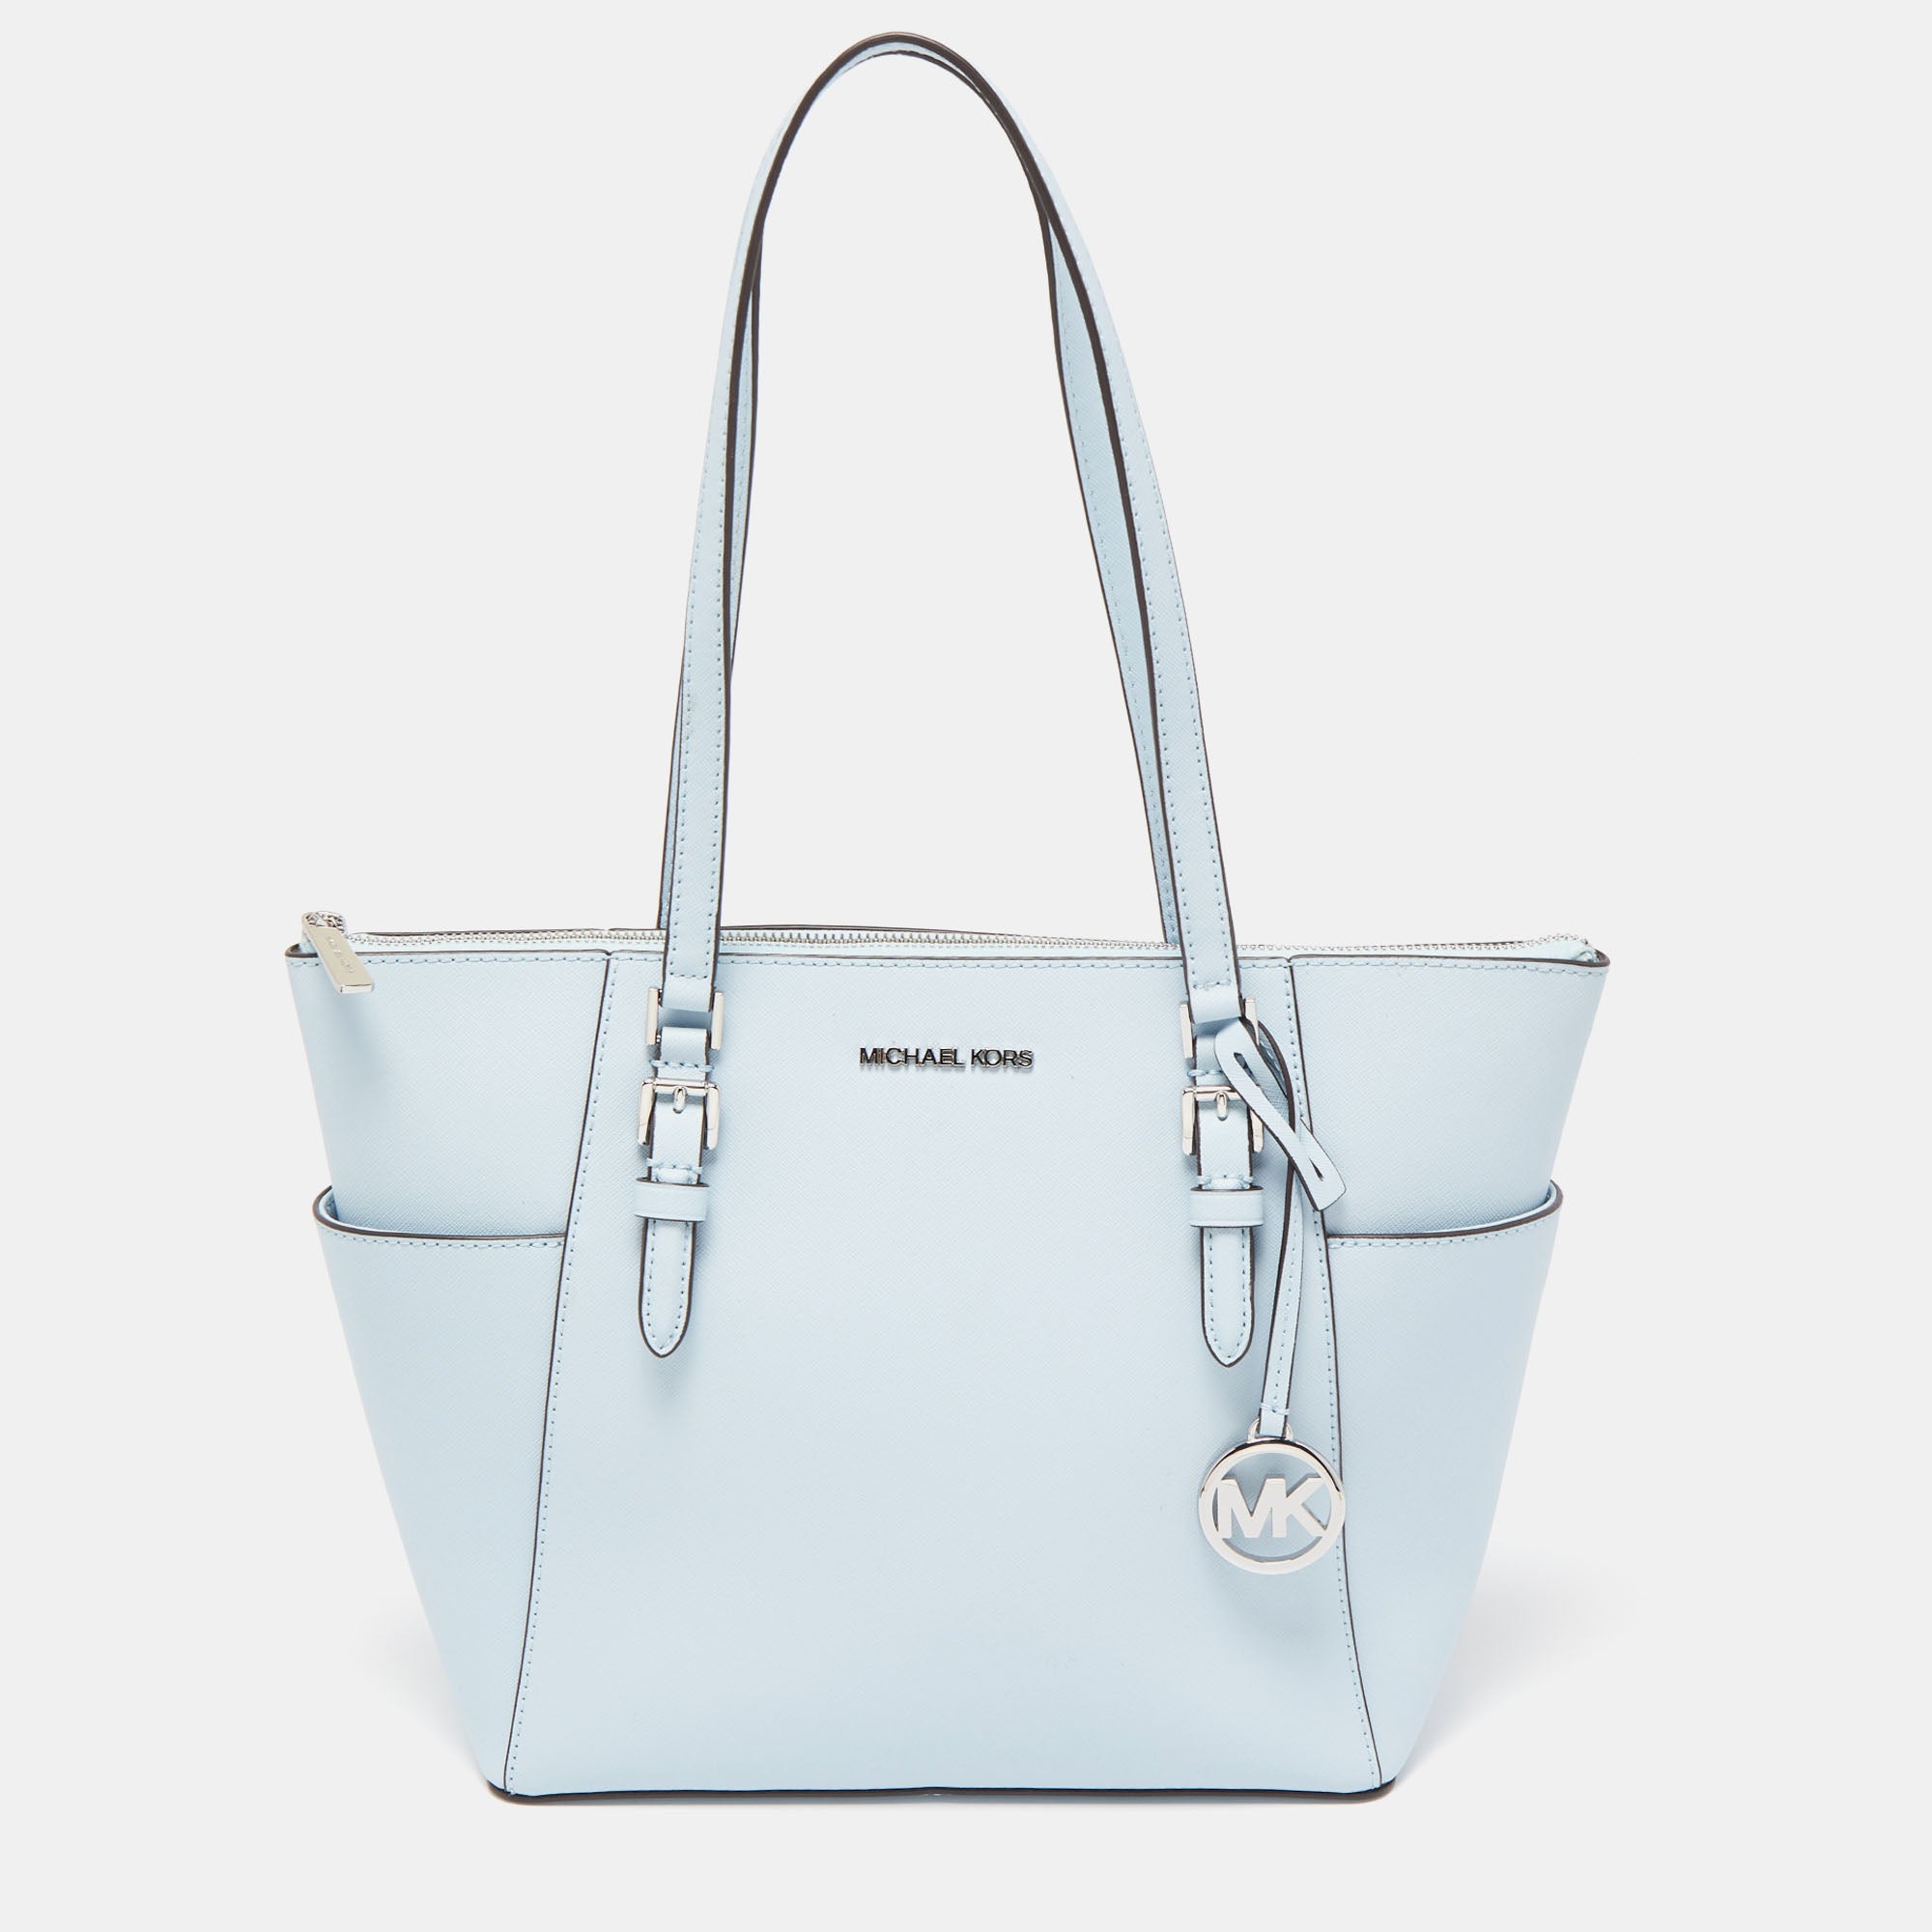 New Authentic Michael Kors Handbags, Purses, Crossbody Bags Wholesale -  United States, New - The wholesale platform | Merkandi B2B